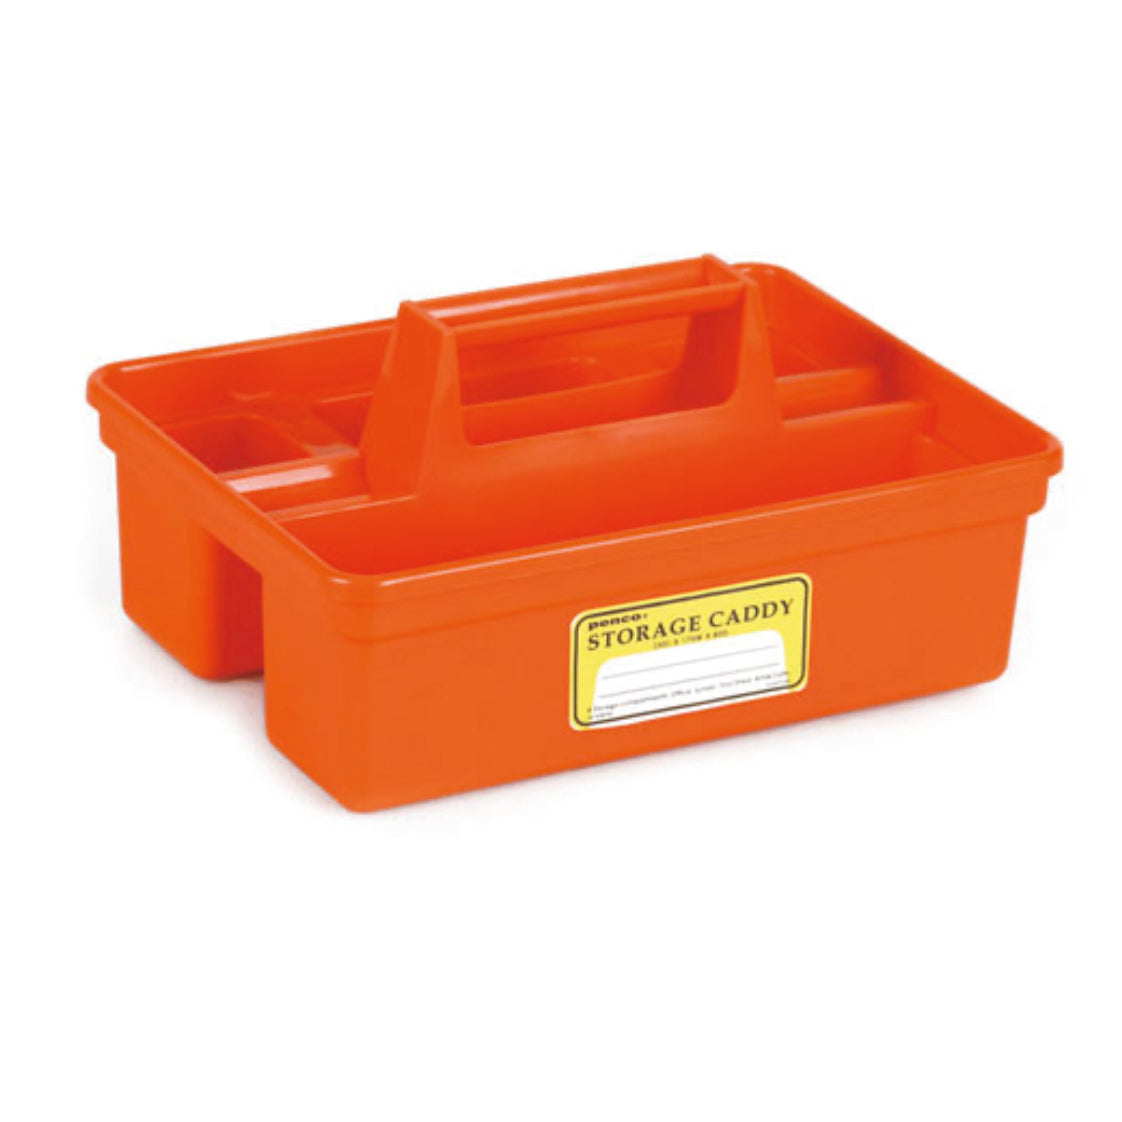 Penco Storage Caddy - Orange